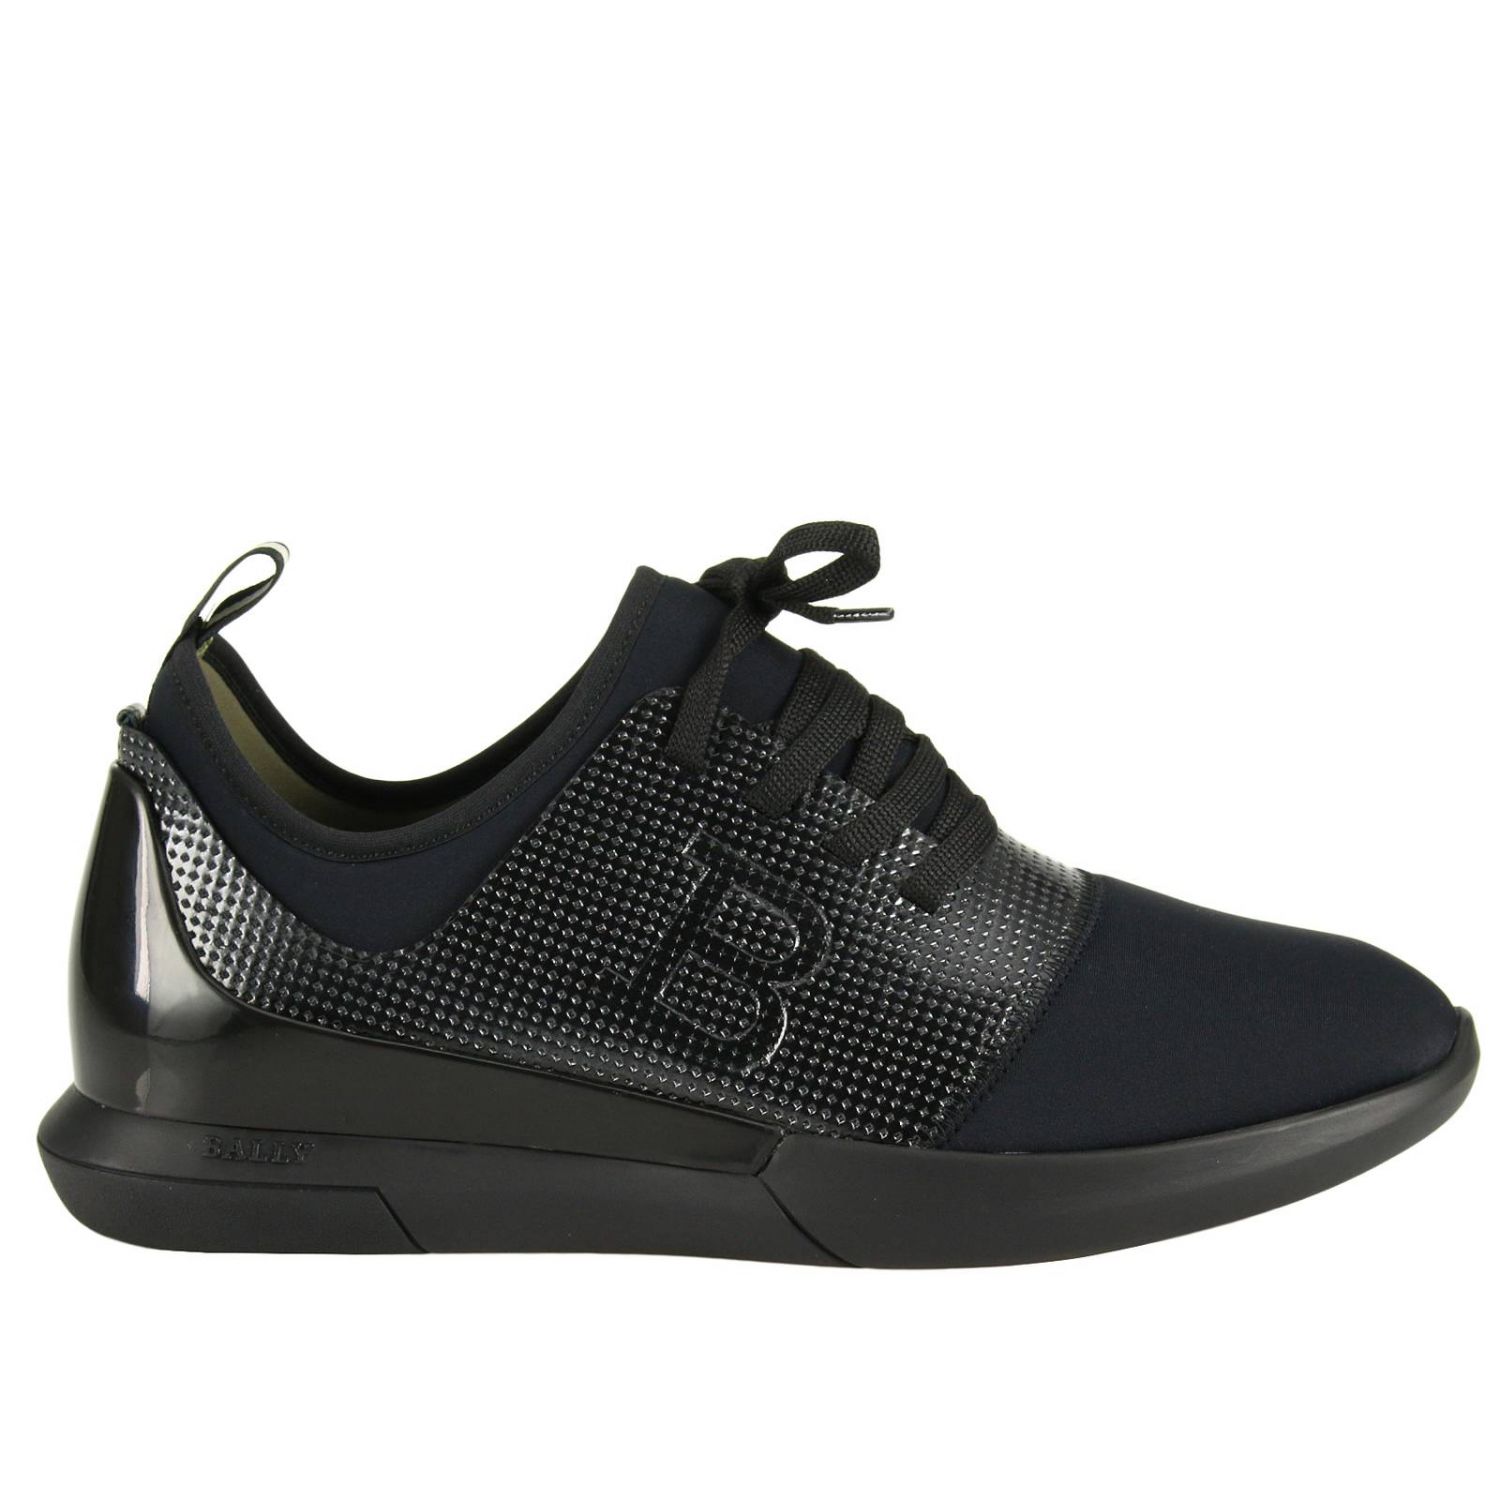 Shoes men Bally | Sneakers Bally Men Black | Sneakers Bally 6221332 ...